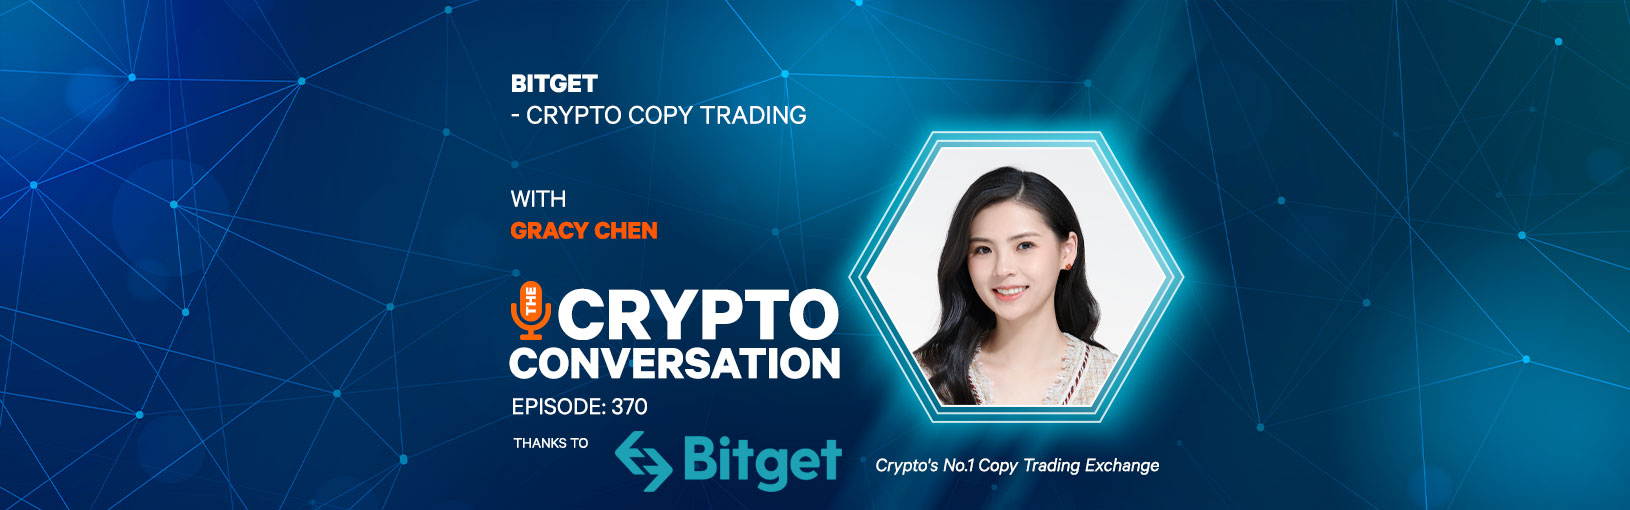 Bitget – Crypto Copy Trading